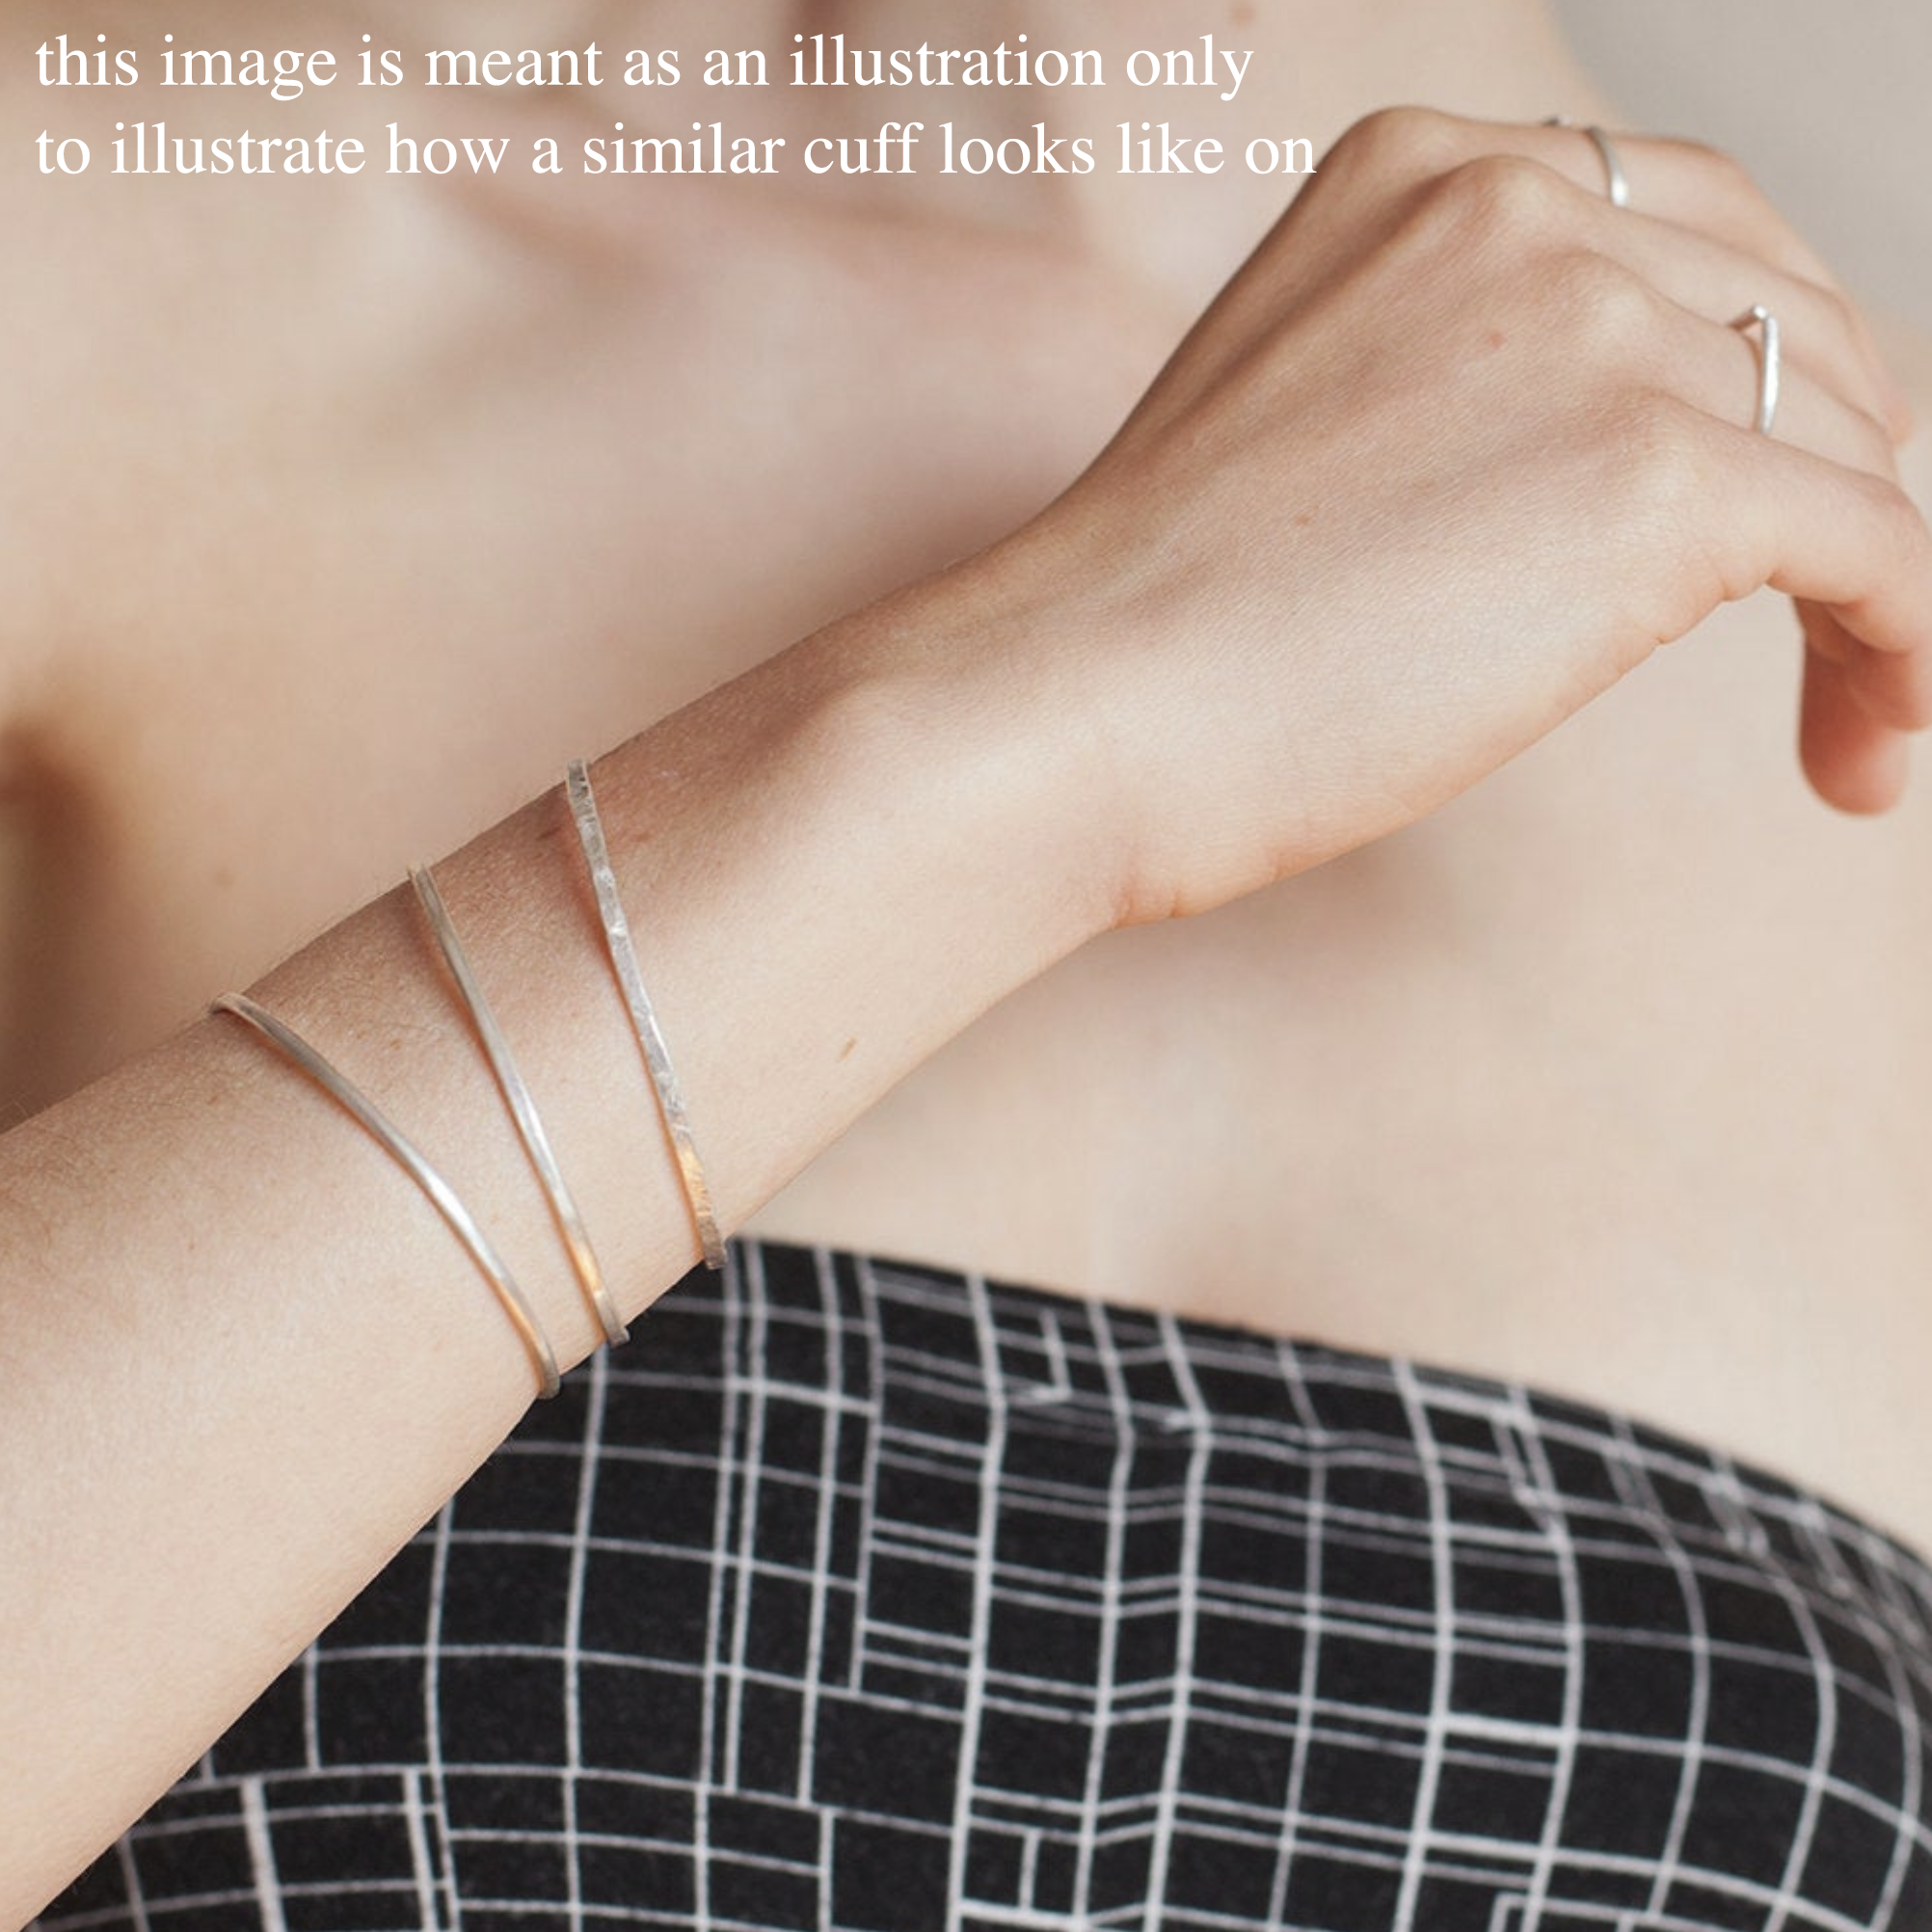 OOAK Simple thin bracelet in silver #1 • size 5,5cm (ready-to-ship)